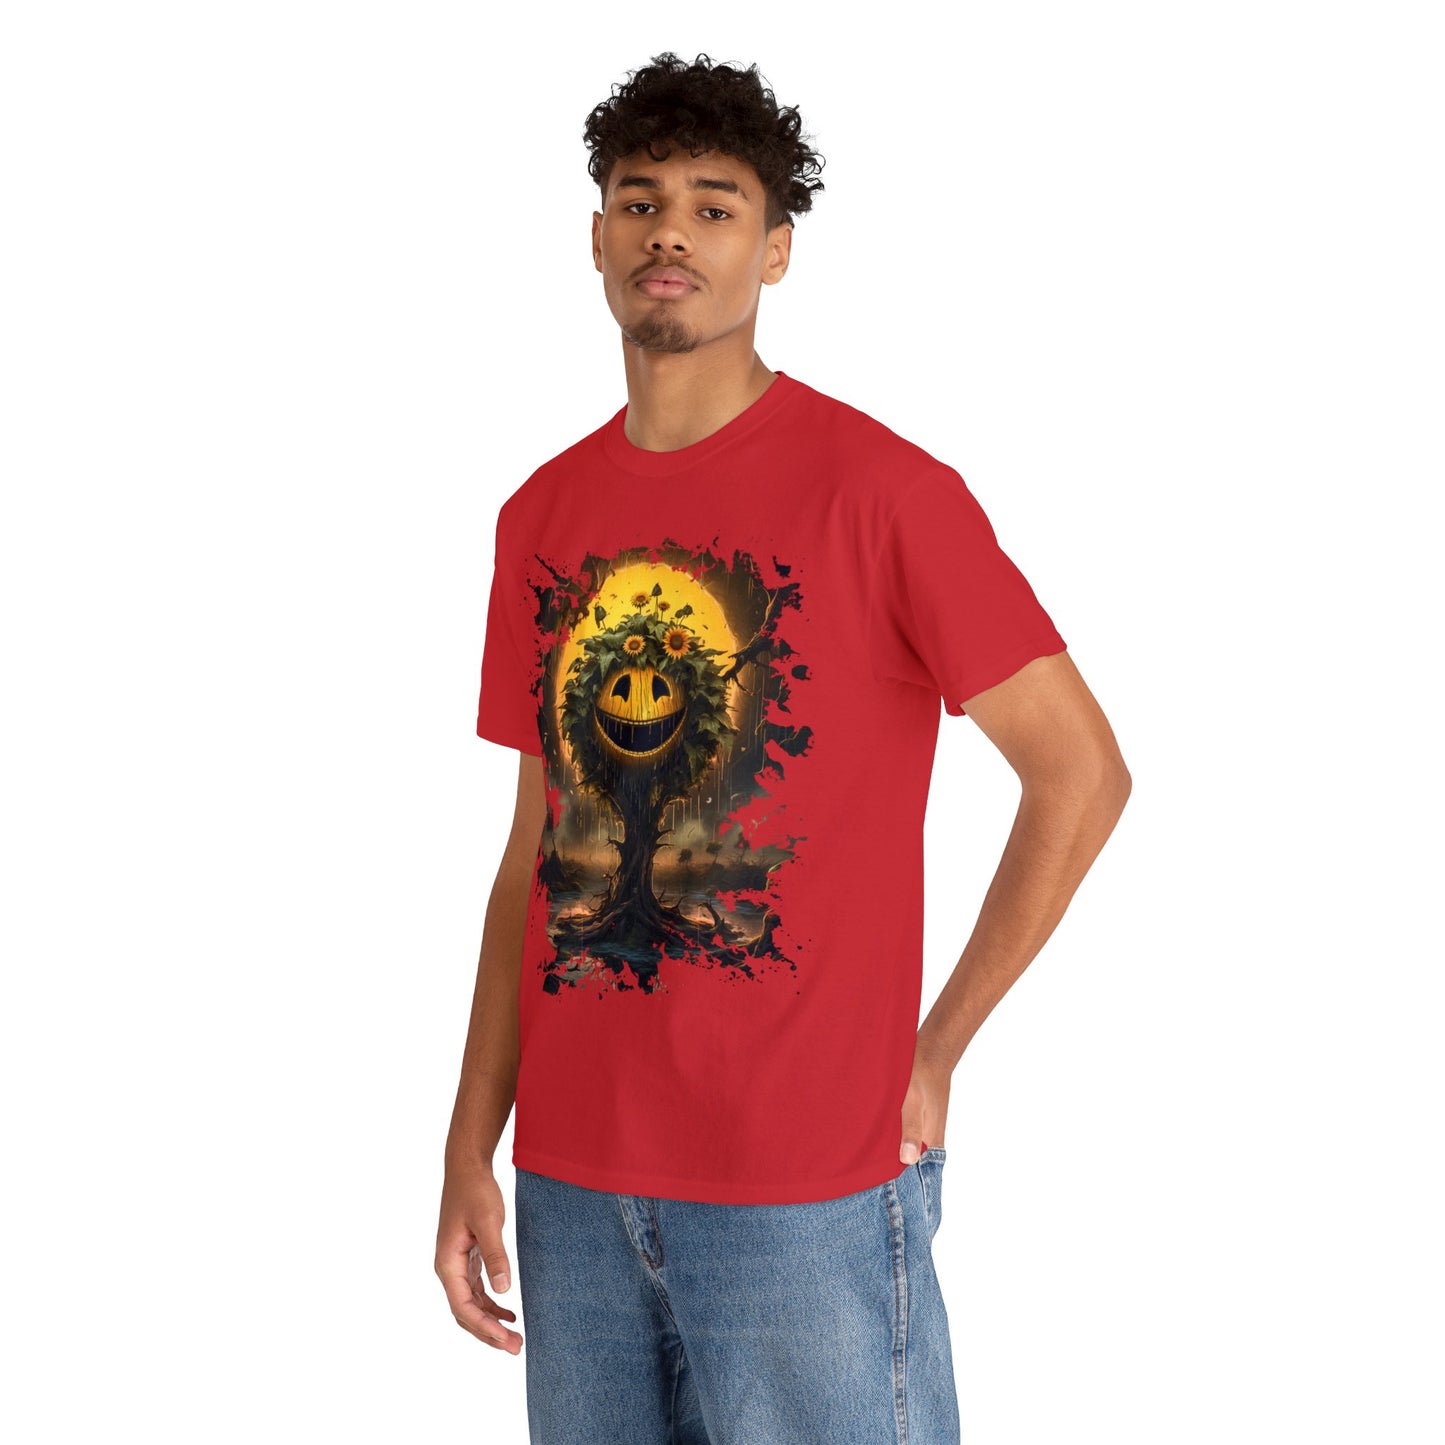 Scary Smiley Emoticon-Tree Unisex Heavy Cotton Tee (t-shirt)